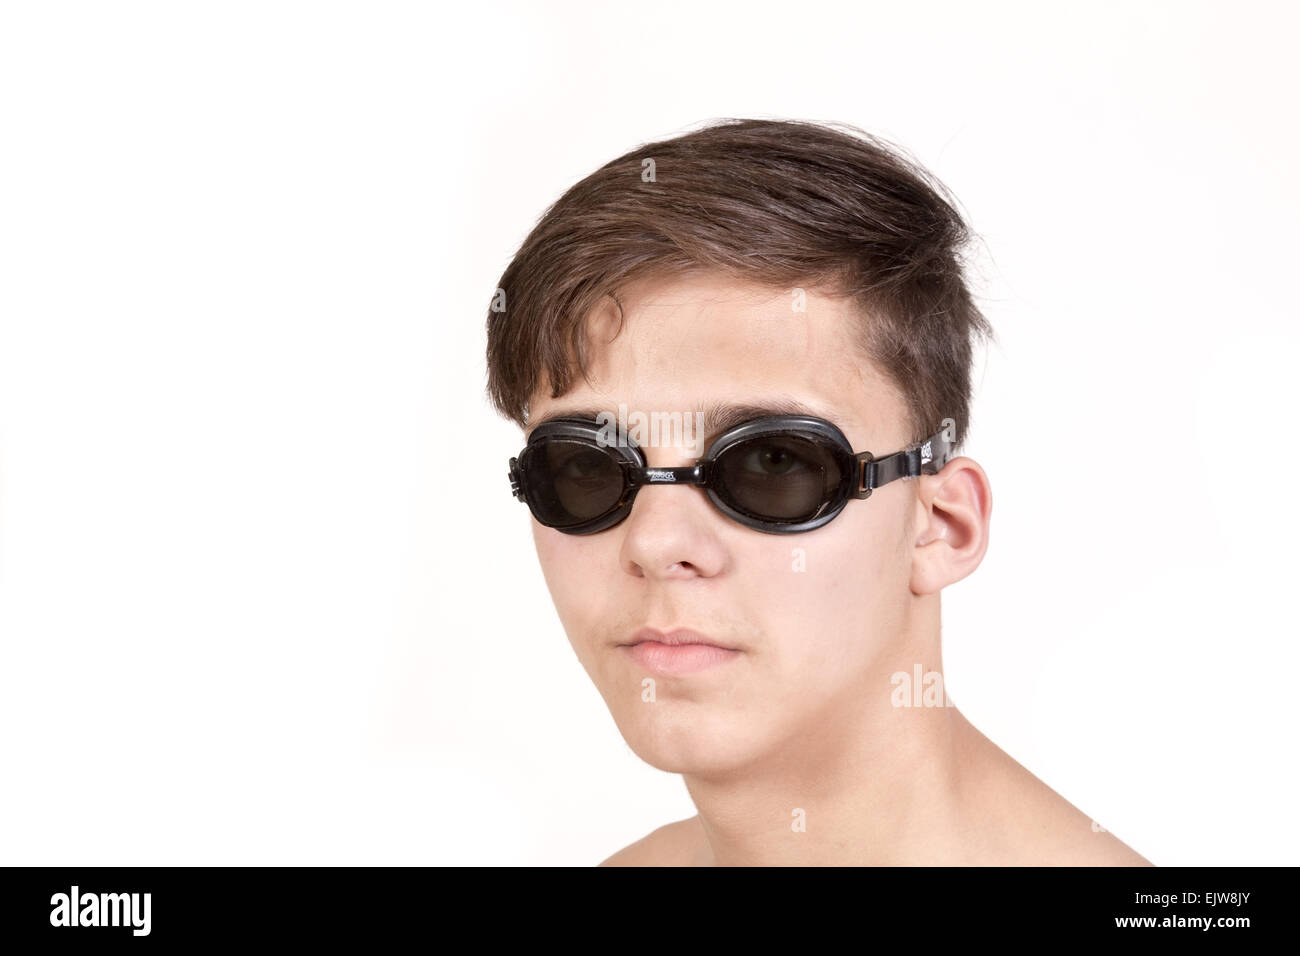 White teenage boy wearing swimming goggles. Stock Photo